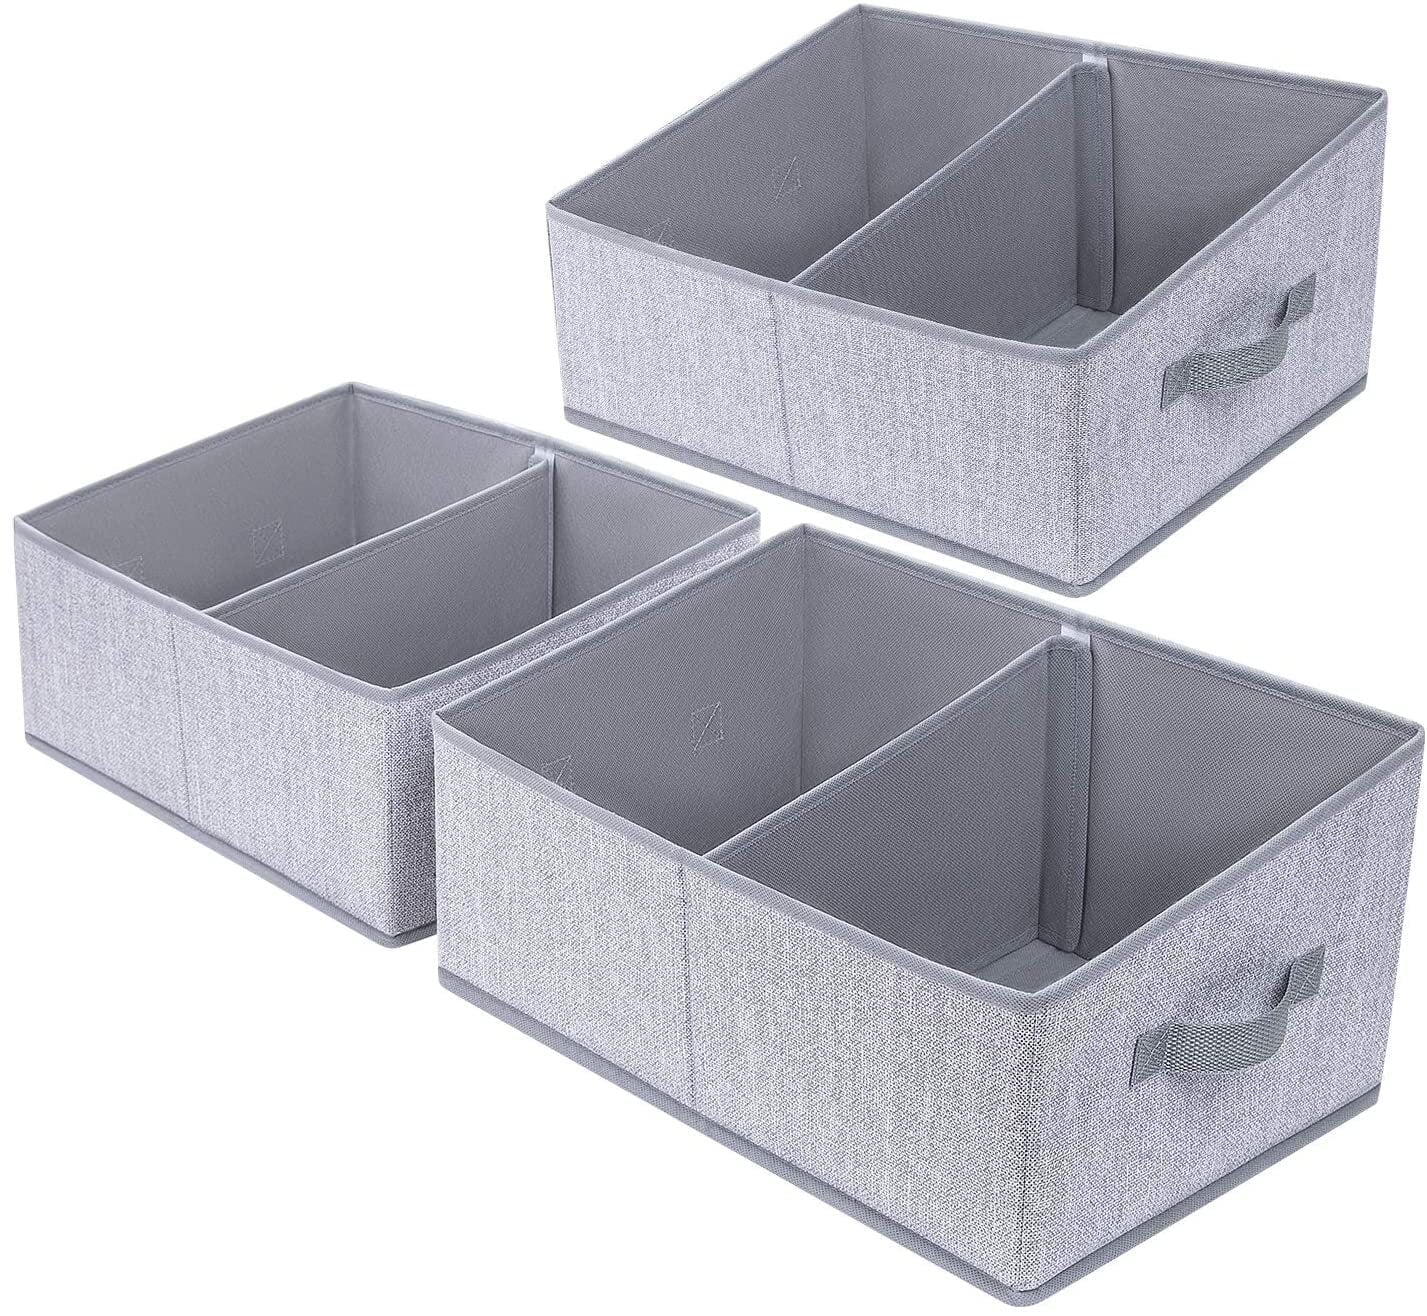 DIMJ Closet Organizer Storage Bins, 6 Pcs Fabric Storage Containers Cube Trapezoid Organizer Basket for Bedroom Bathroom Cloth, Baby Toiletry, Toys